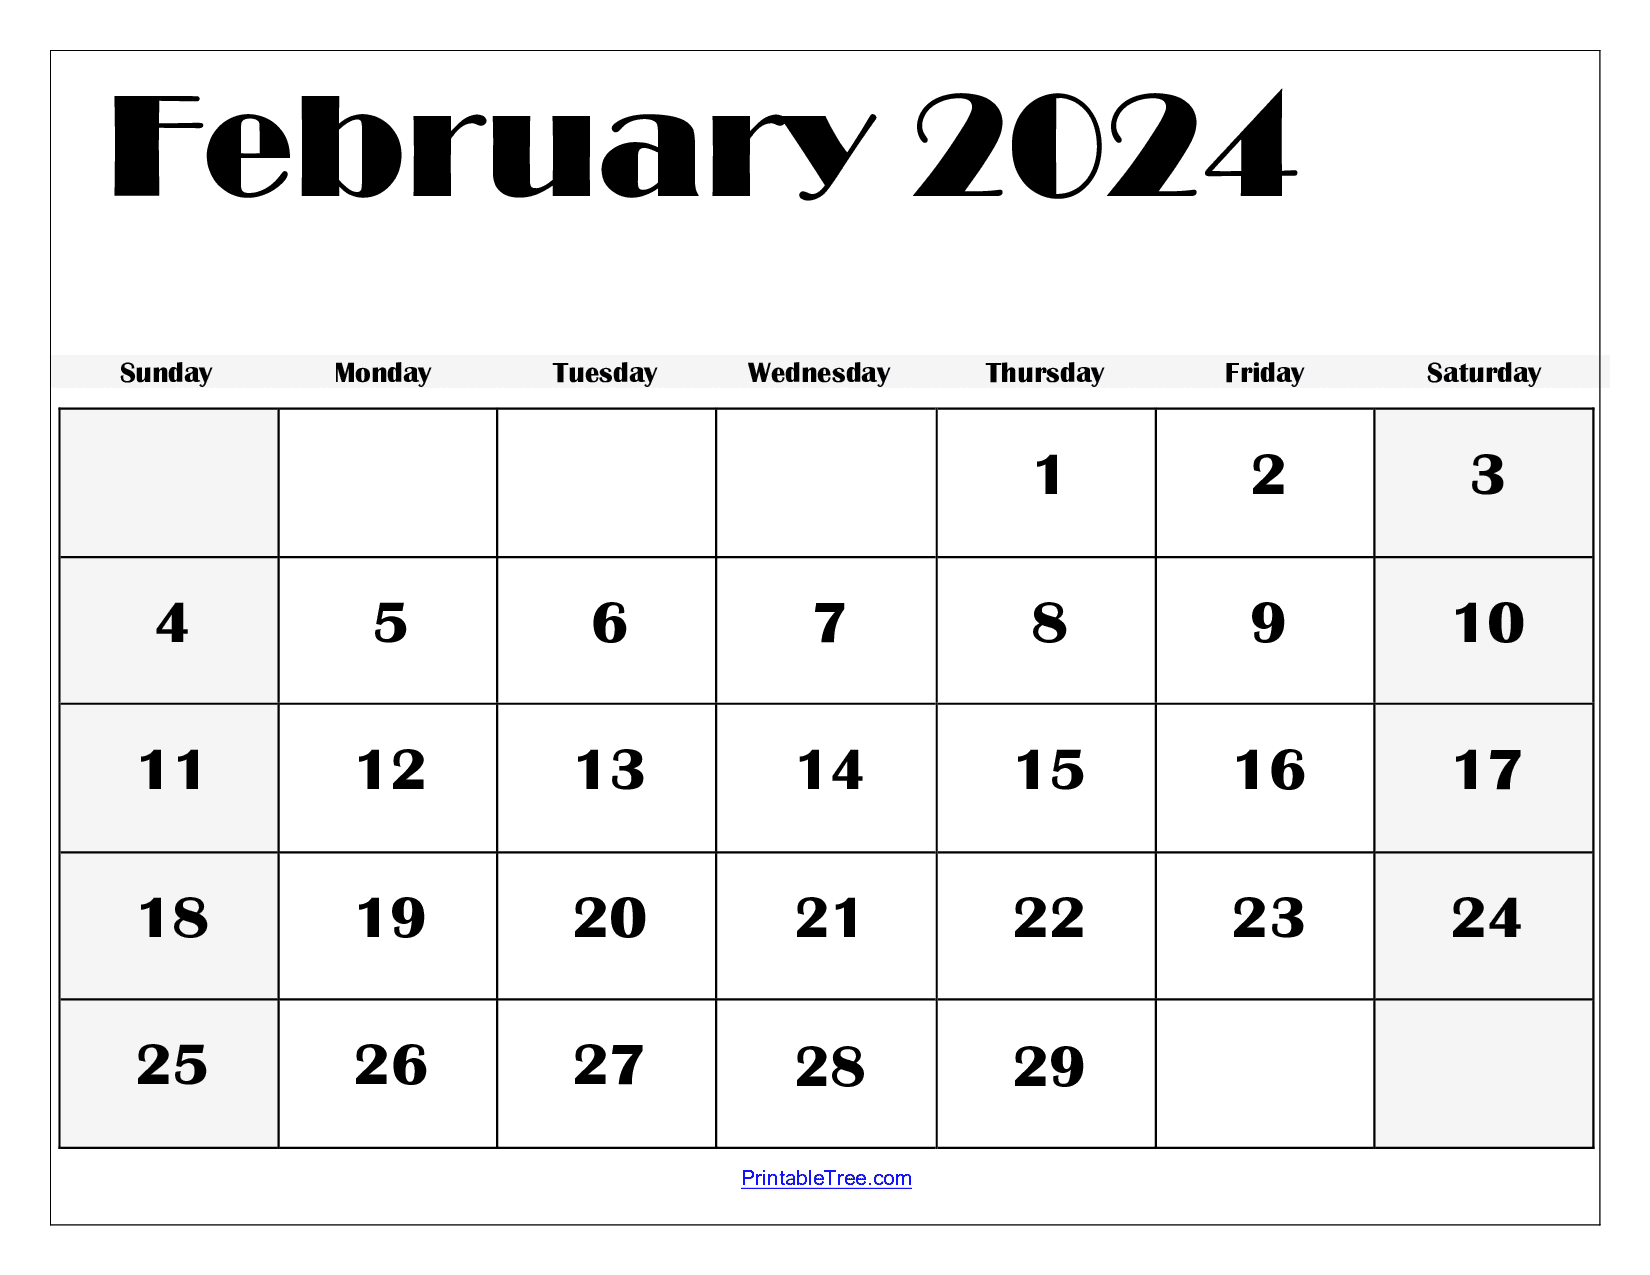 February 2024 Calendar Printable Pdf Template With Holidays for Free Printable Calendar February 2024